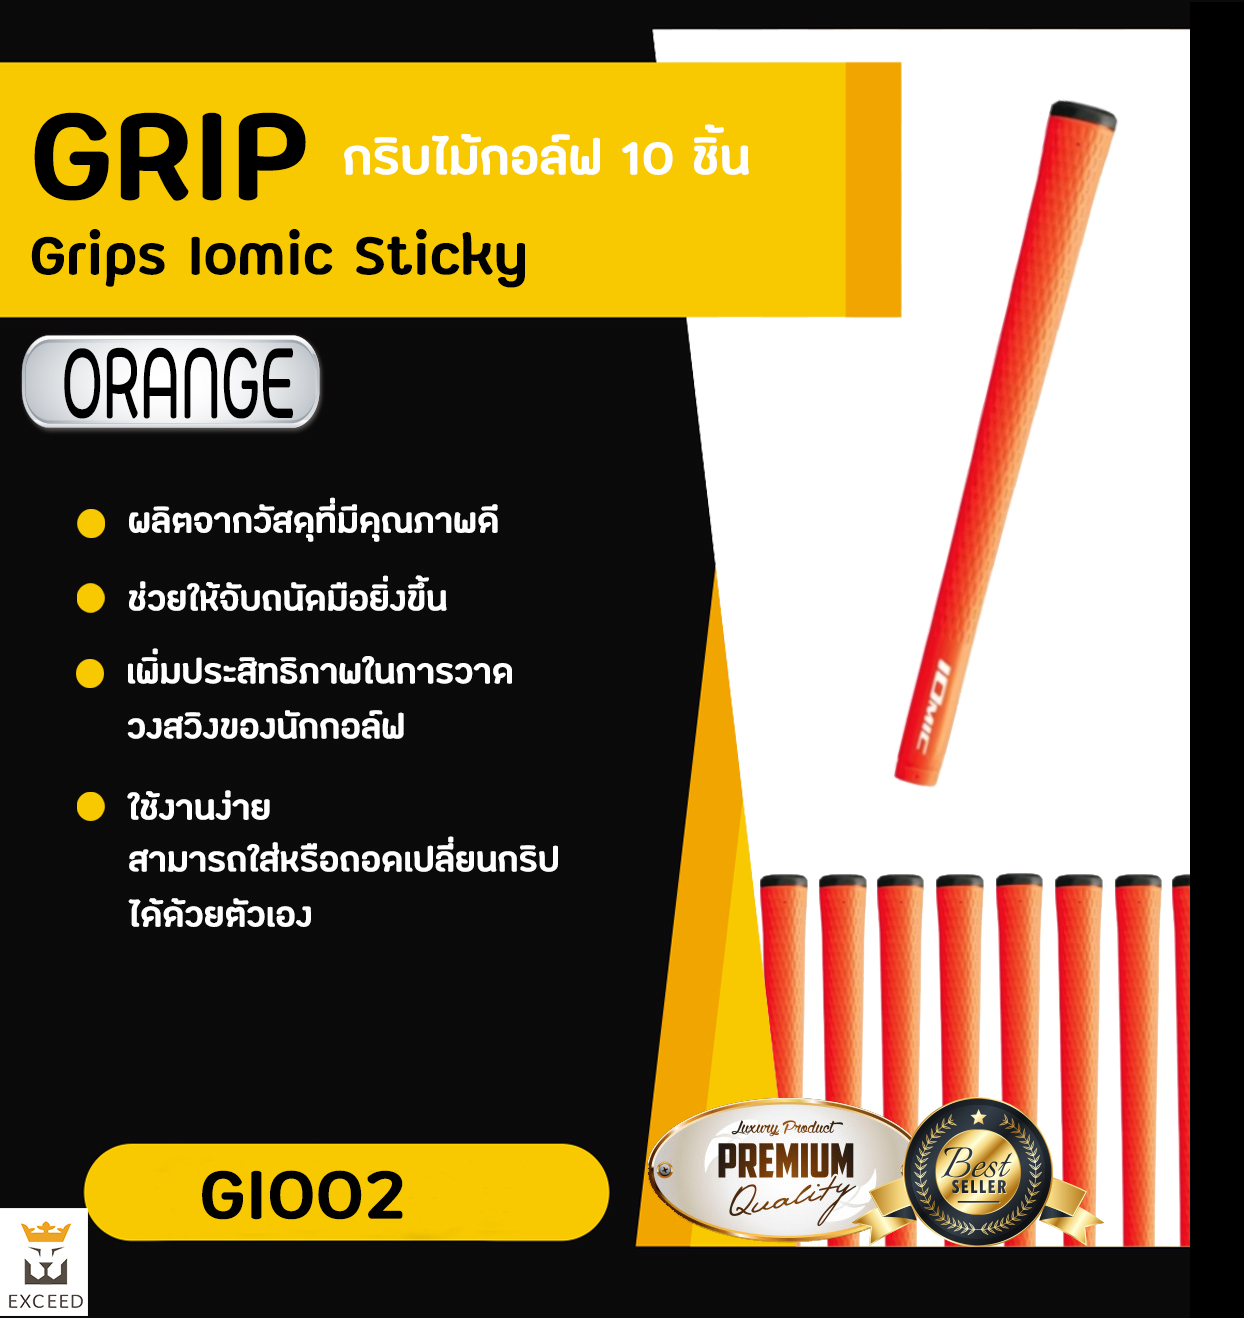 Iomic Sticky 2.3 Grip, Ribbed Colourful มีหลากหลายสีให้เลือก Exceed GI002